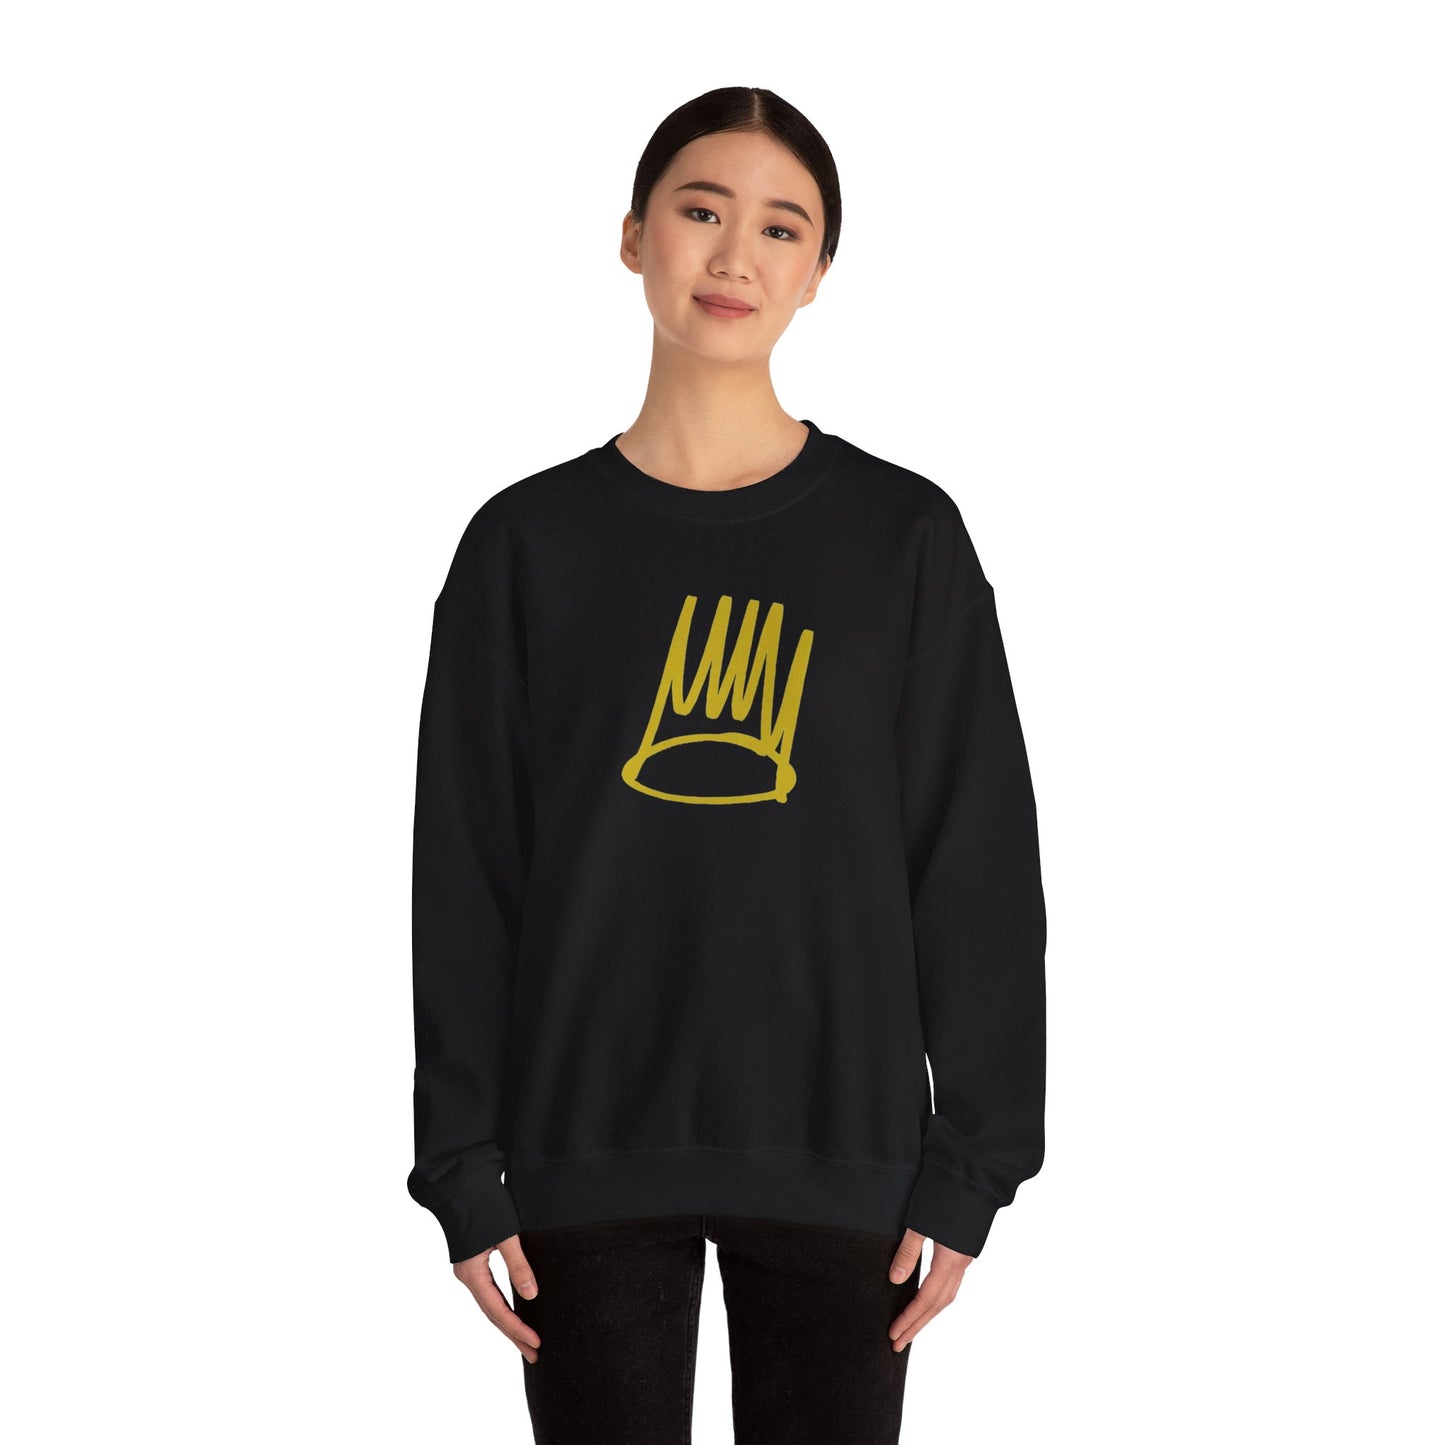 J Cole Crown Sweatshirt